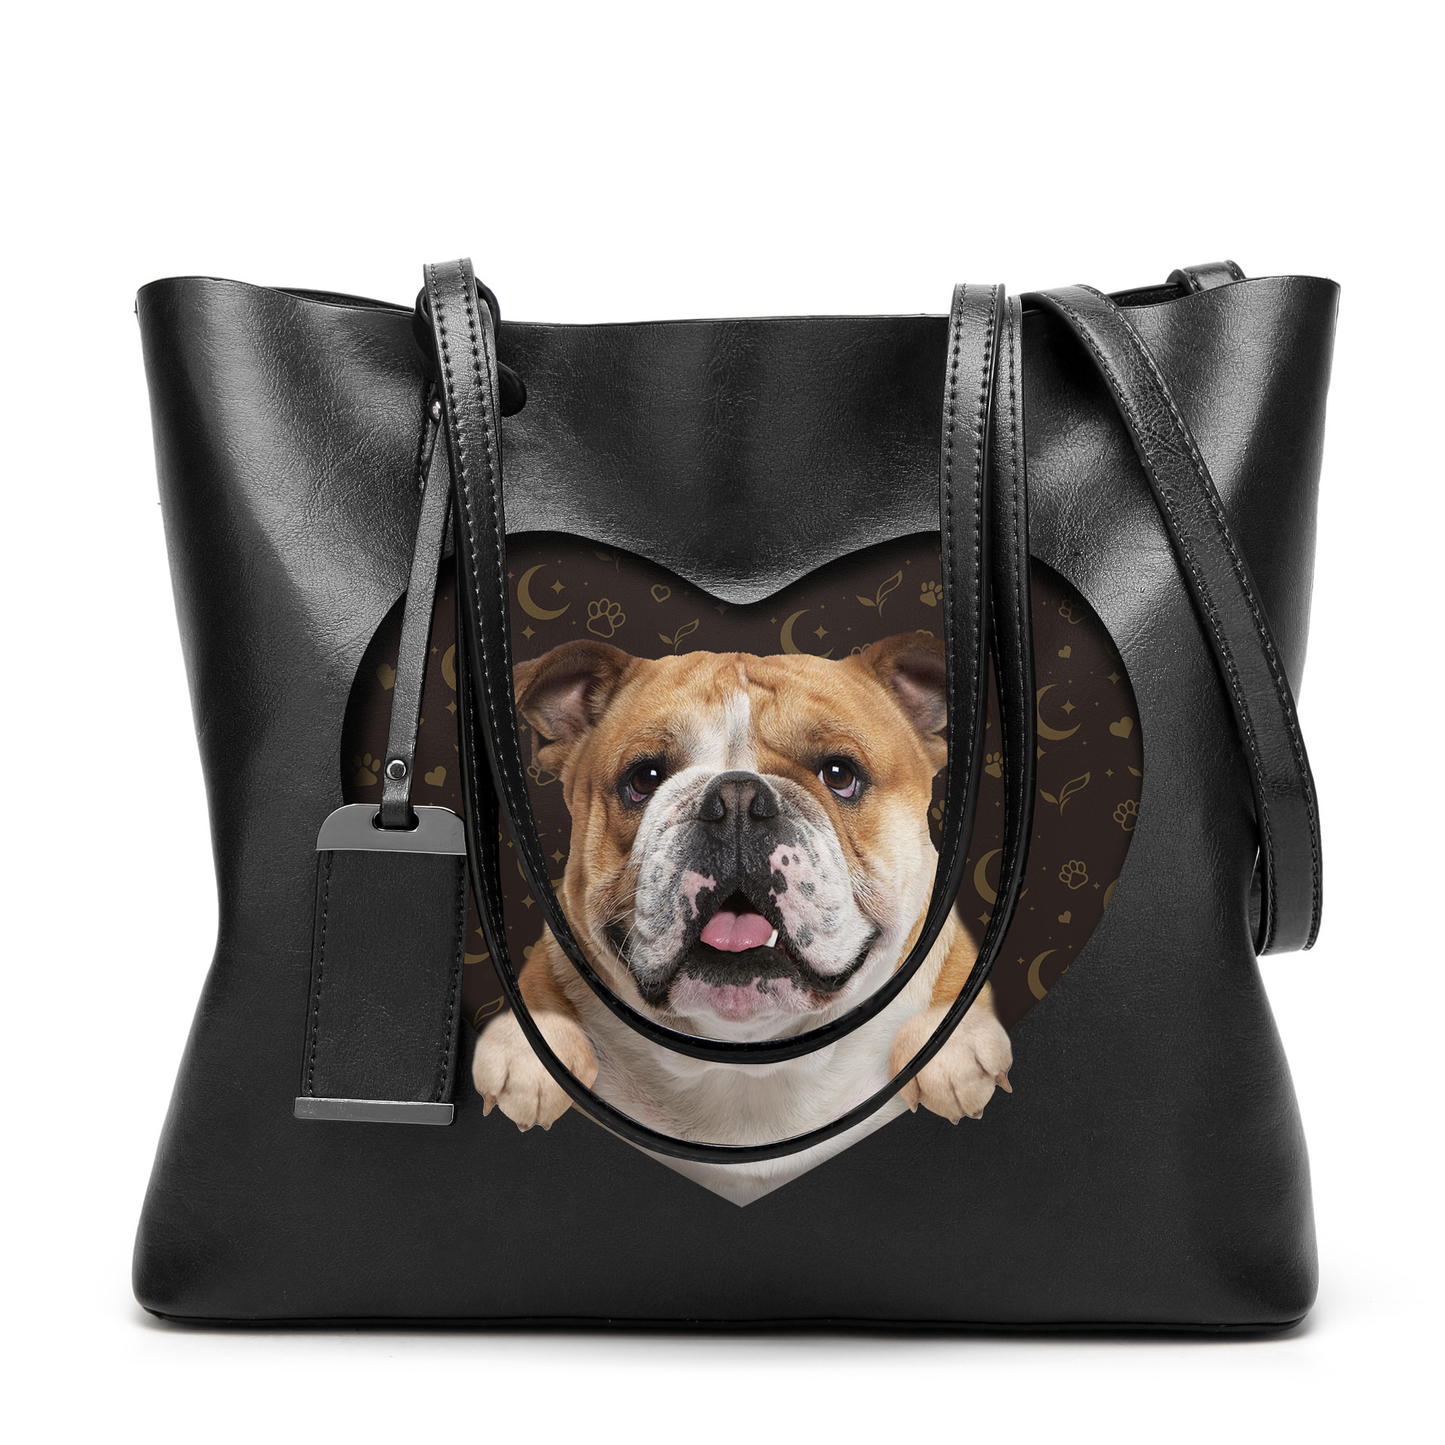 I Know I'm Cute - English Bulldog Glamour Handbag V2